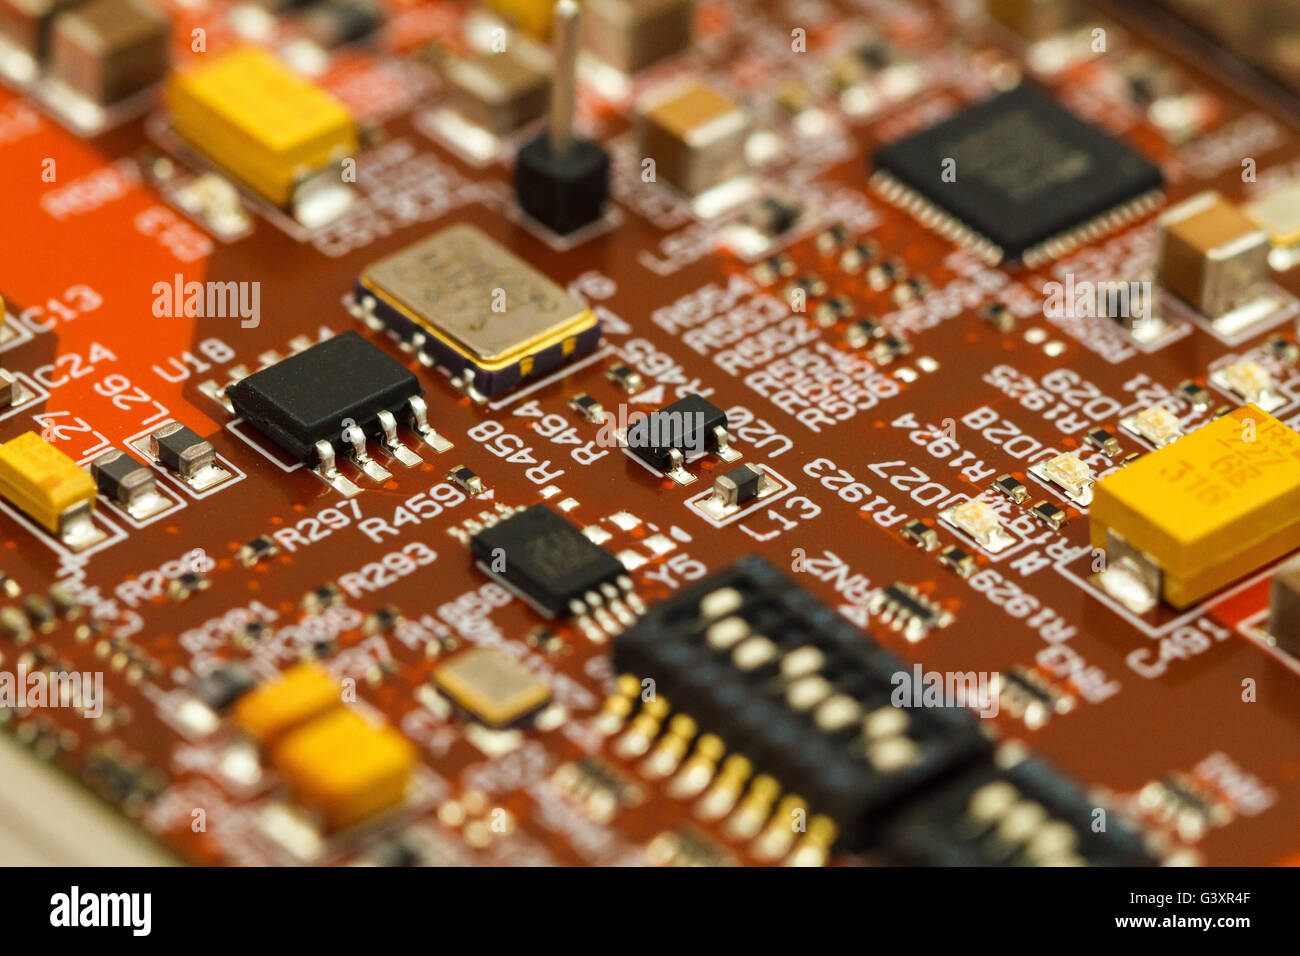 Printed circuit board with ICs, chip capacitors, tantalum capacitors, and chip resistors. Stock Photo